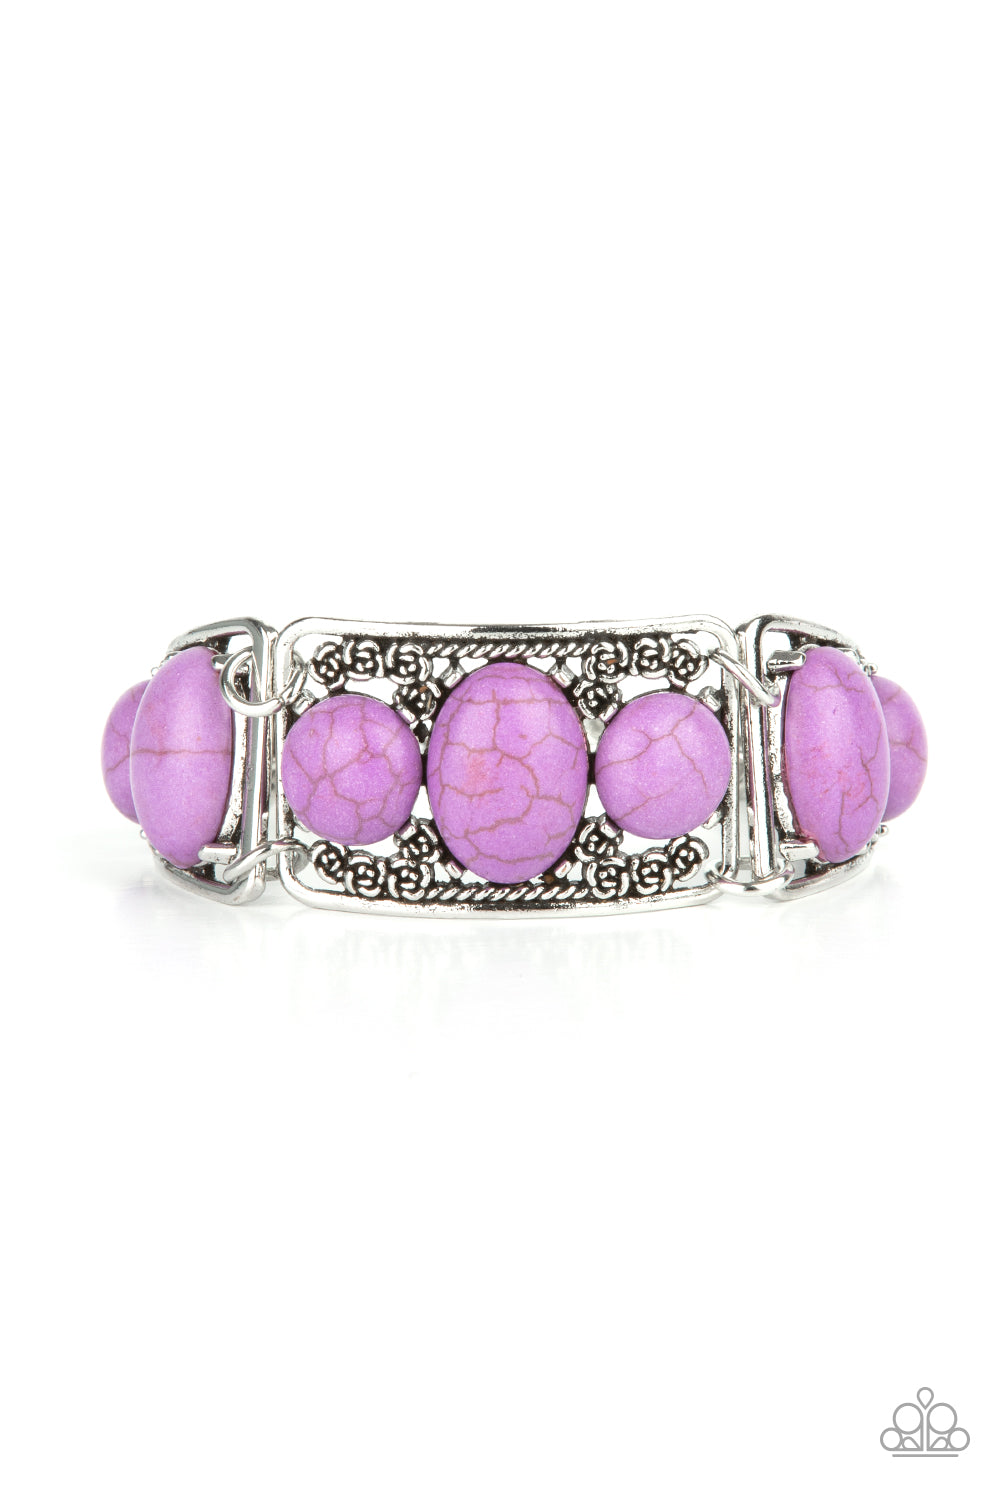 Southern Splendor - Purple bracelet 2211